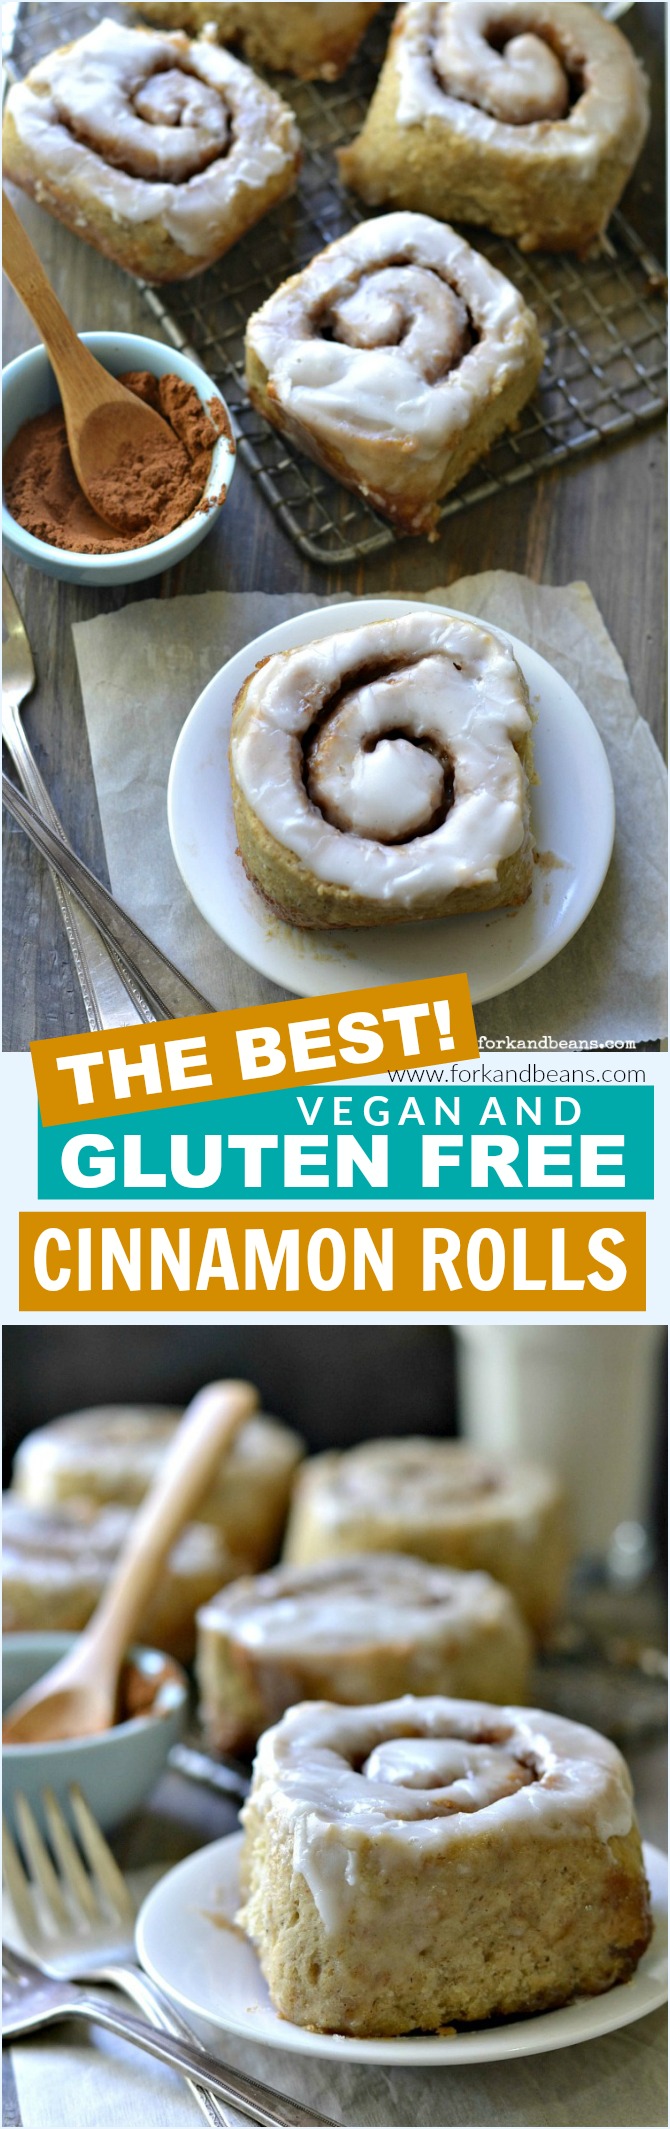 The Best Gluten-free Vegan Cinnamon Roll